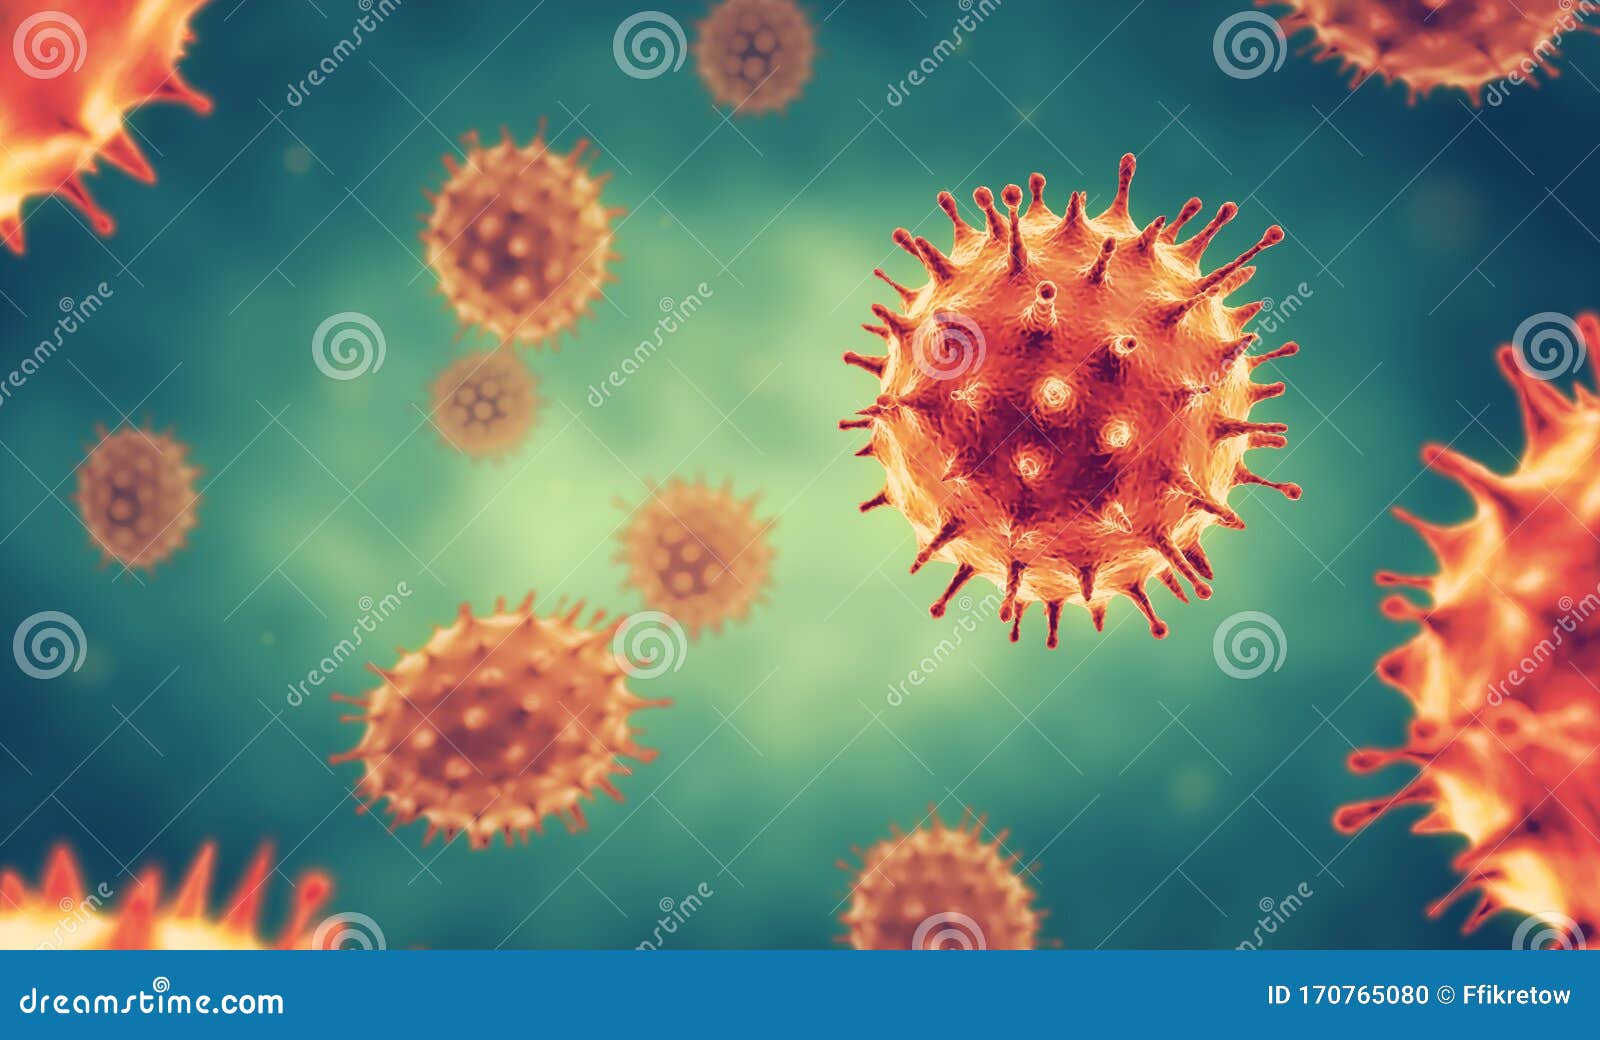 influenza corona virus virus cells